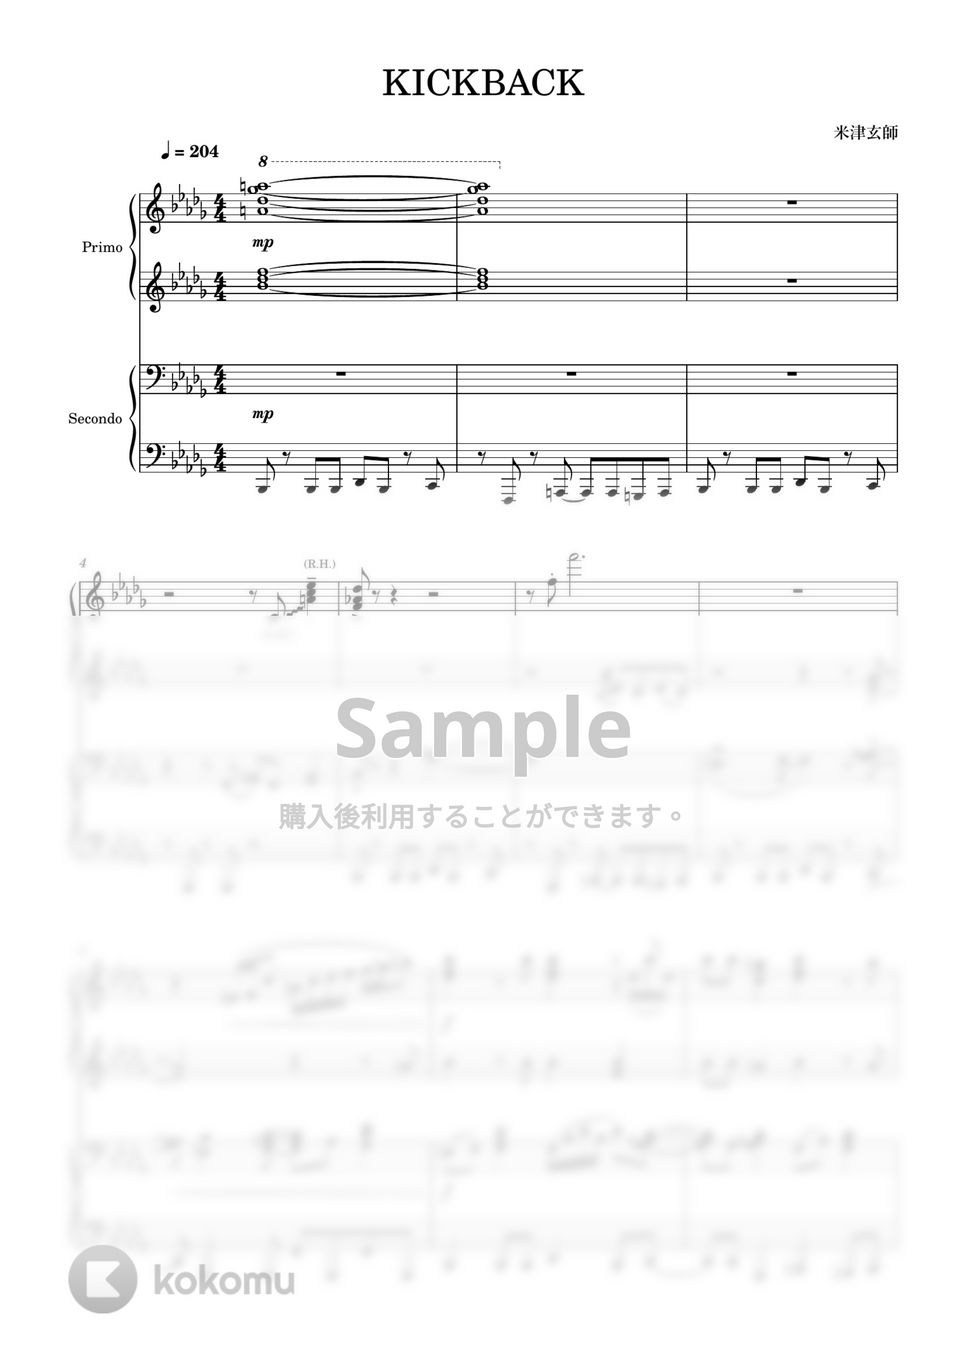 米津玄師 - KICKBACK (ピアノ連弾) by 蒼鷲